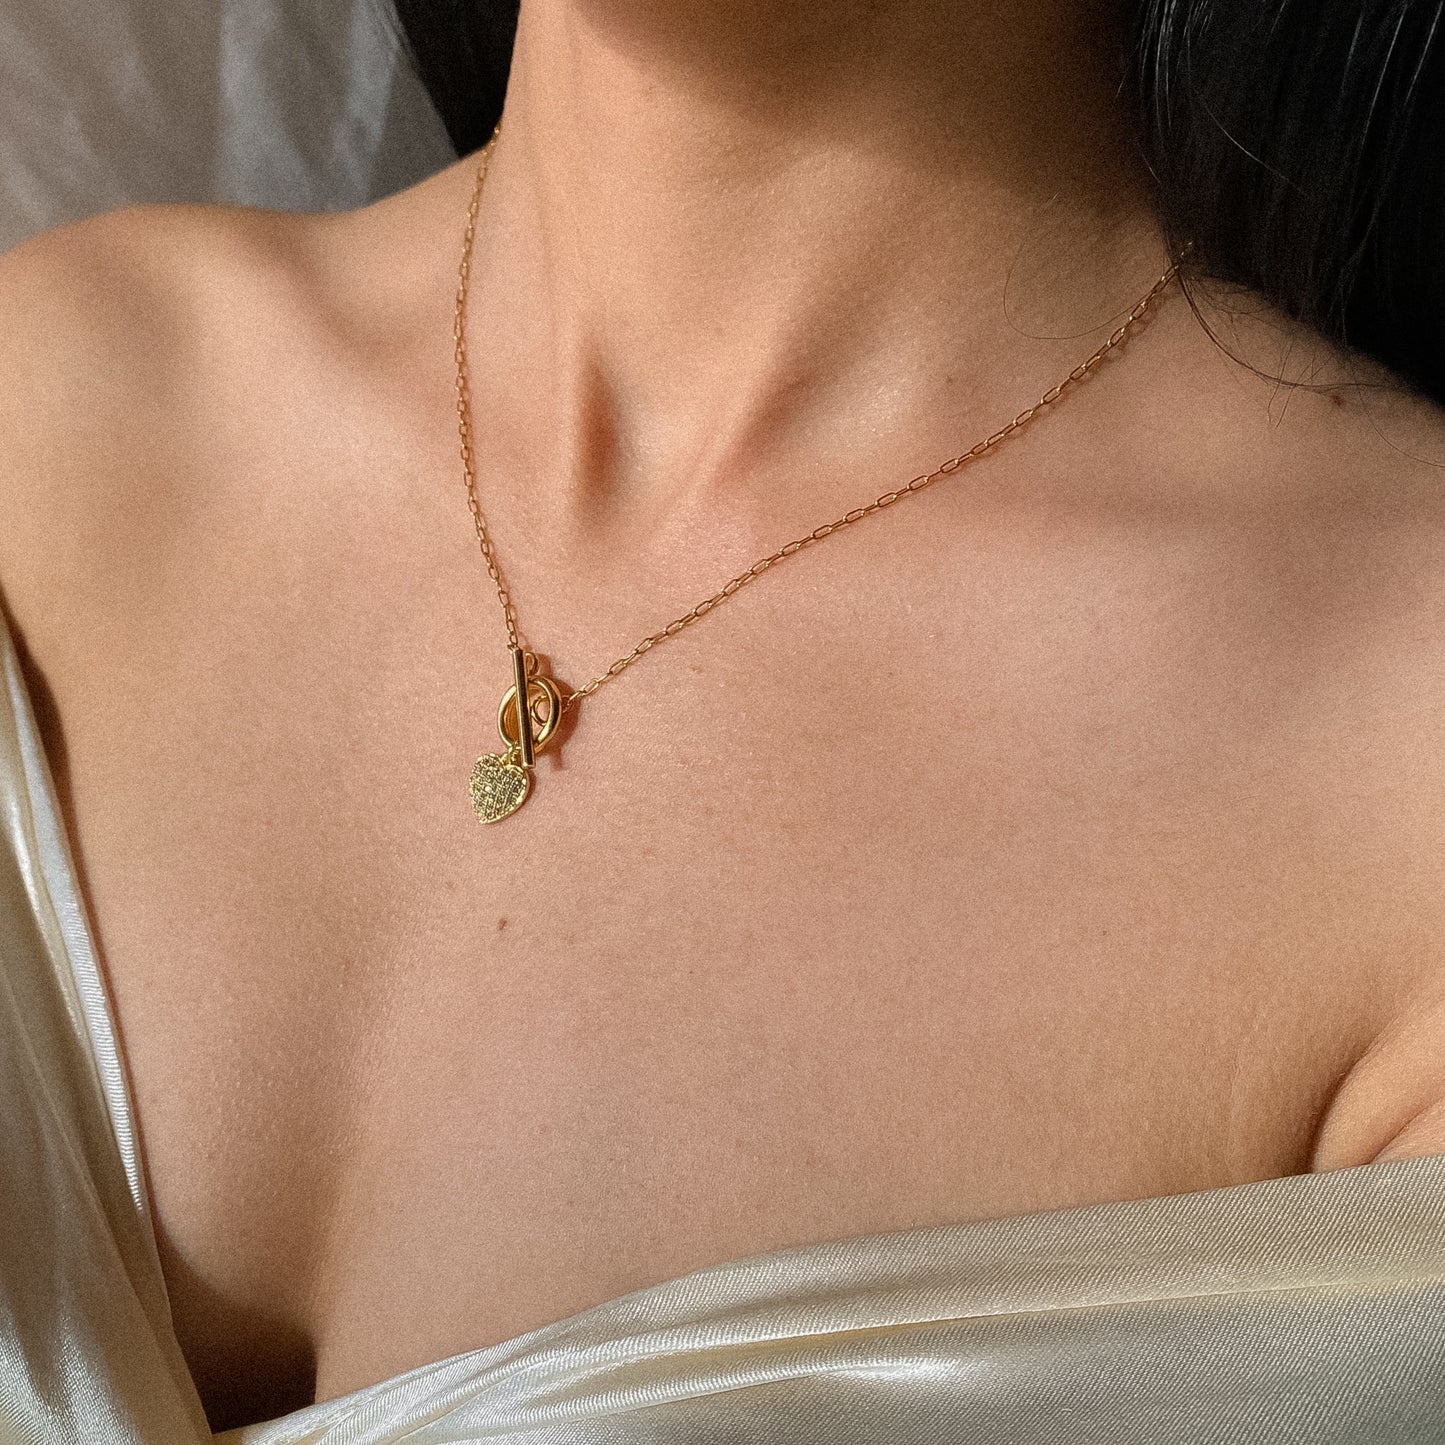 Stefany necklace